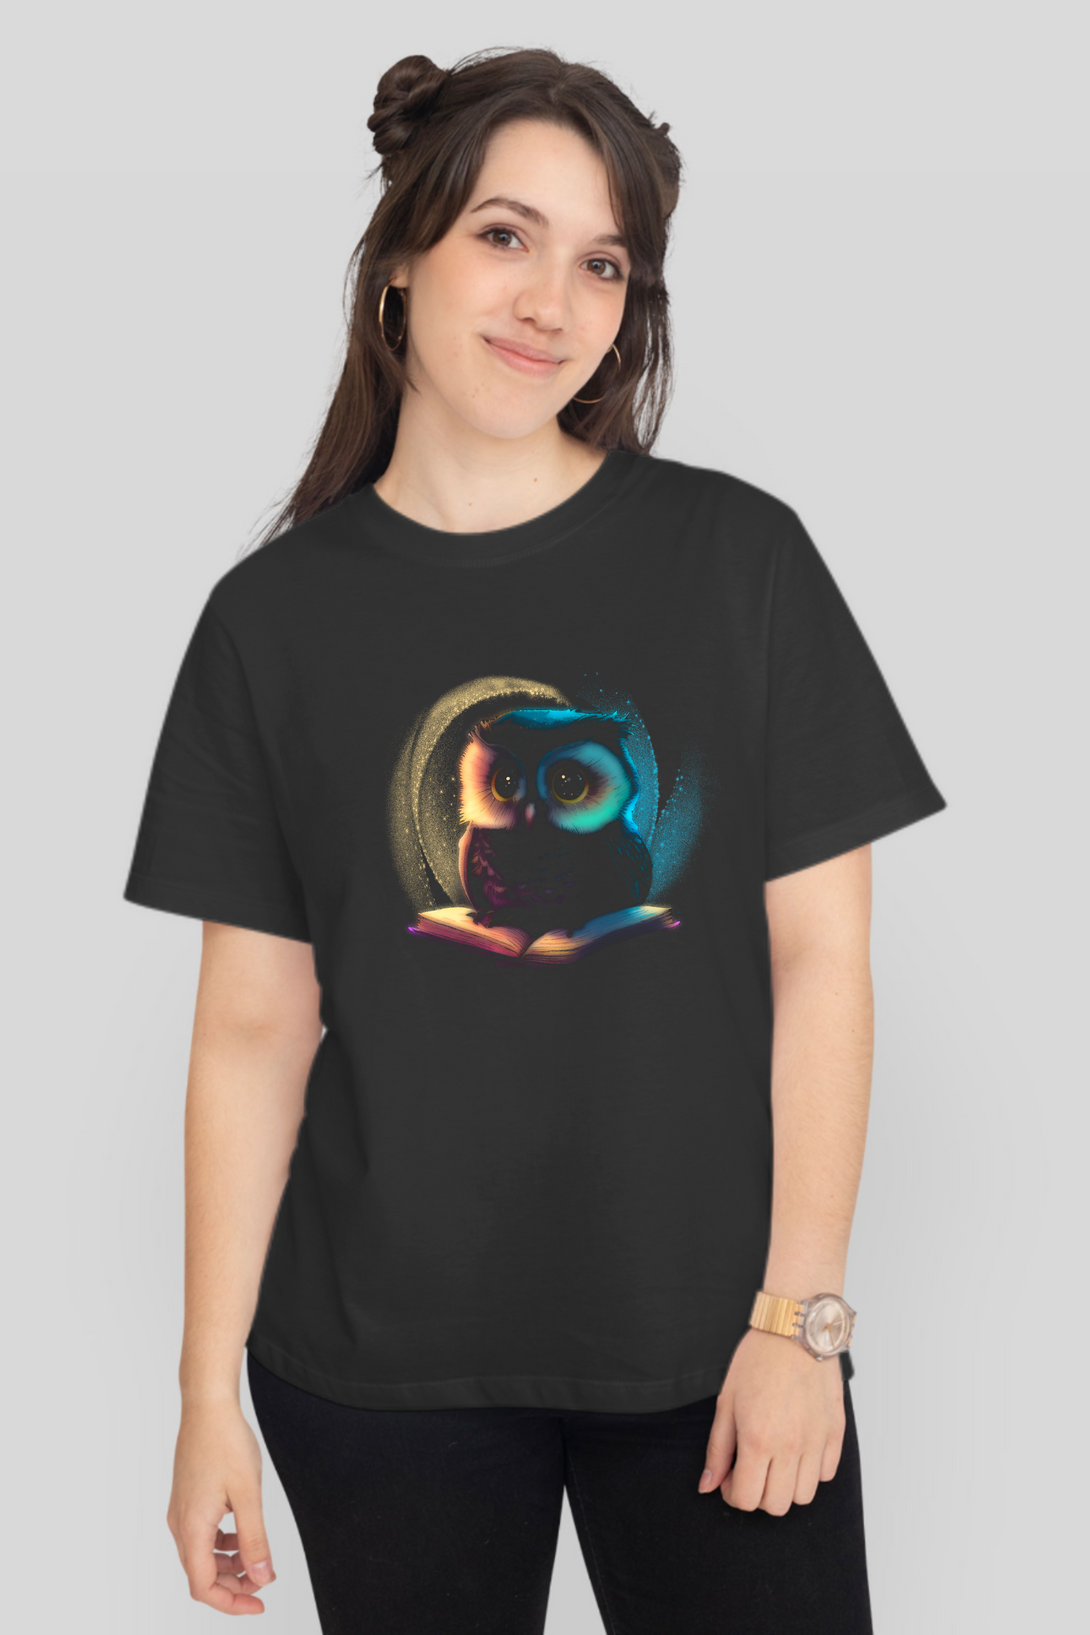 Cute Owl Printed T-Shirt For Women - WowWaves - 8